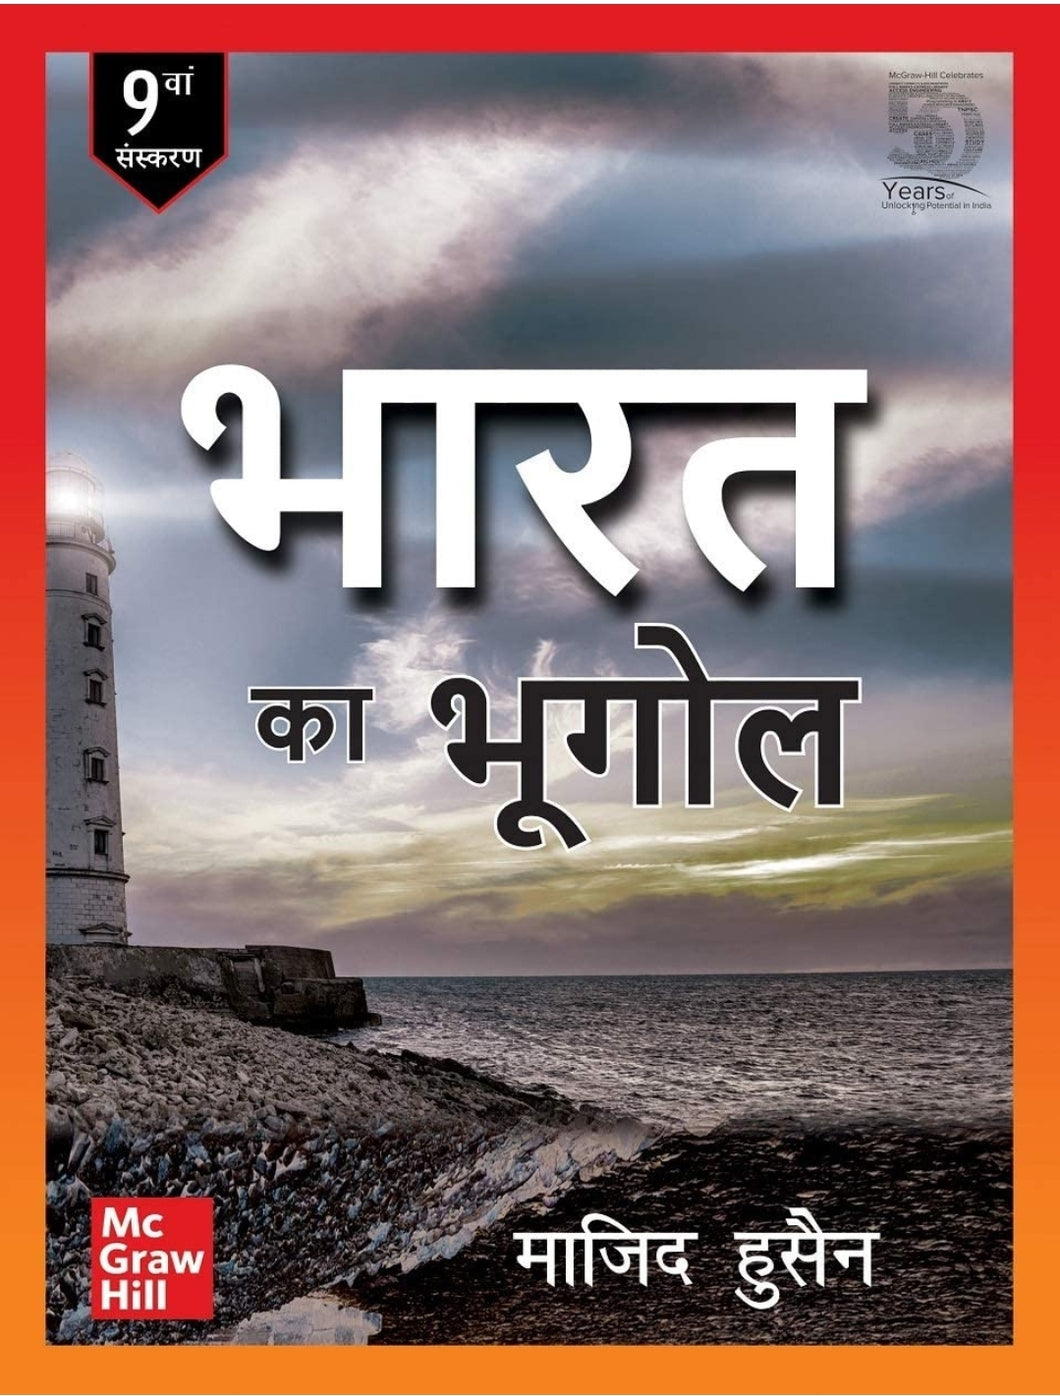 Bharat ka bhugol by Majid Husain